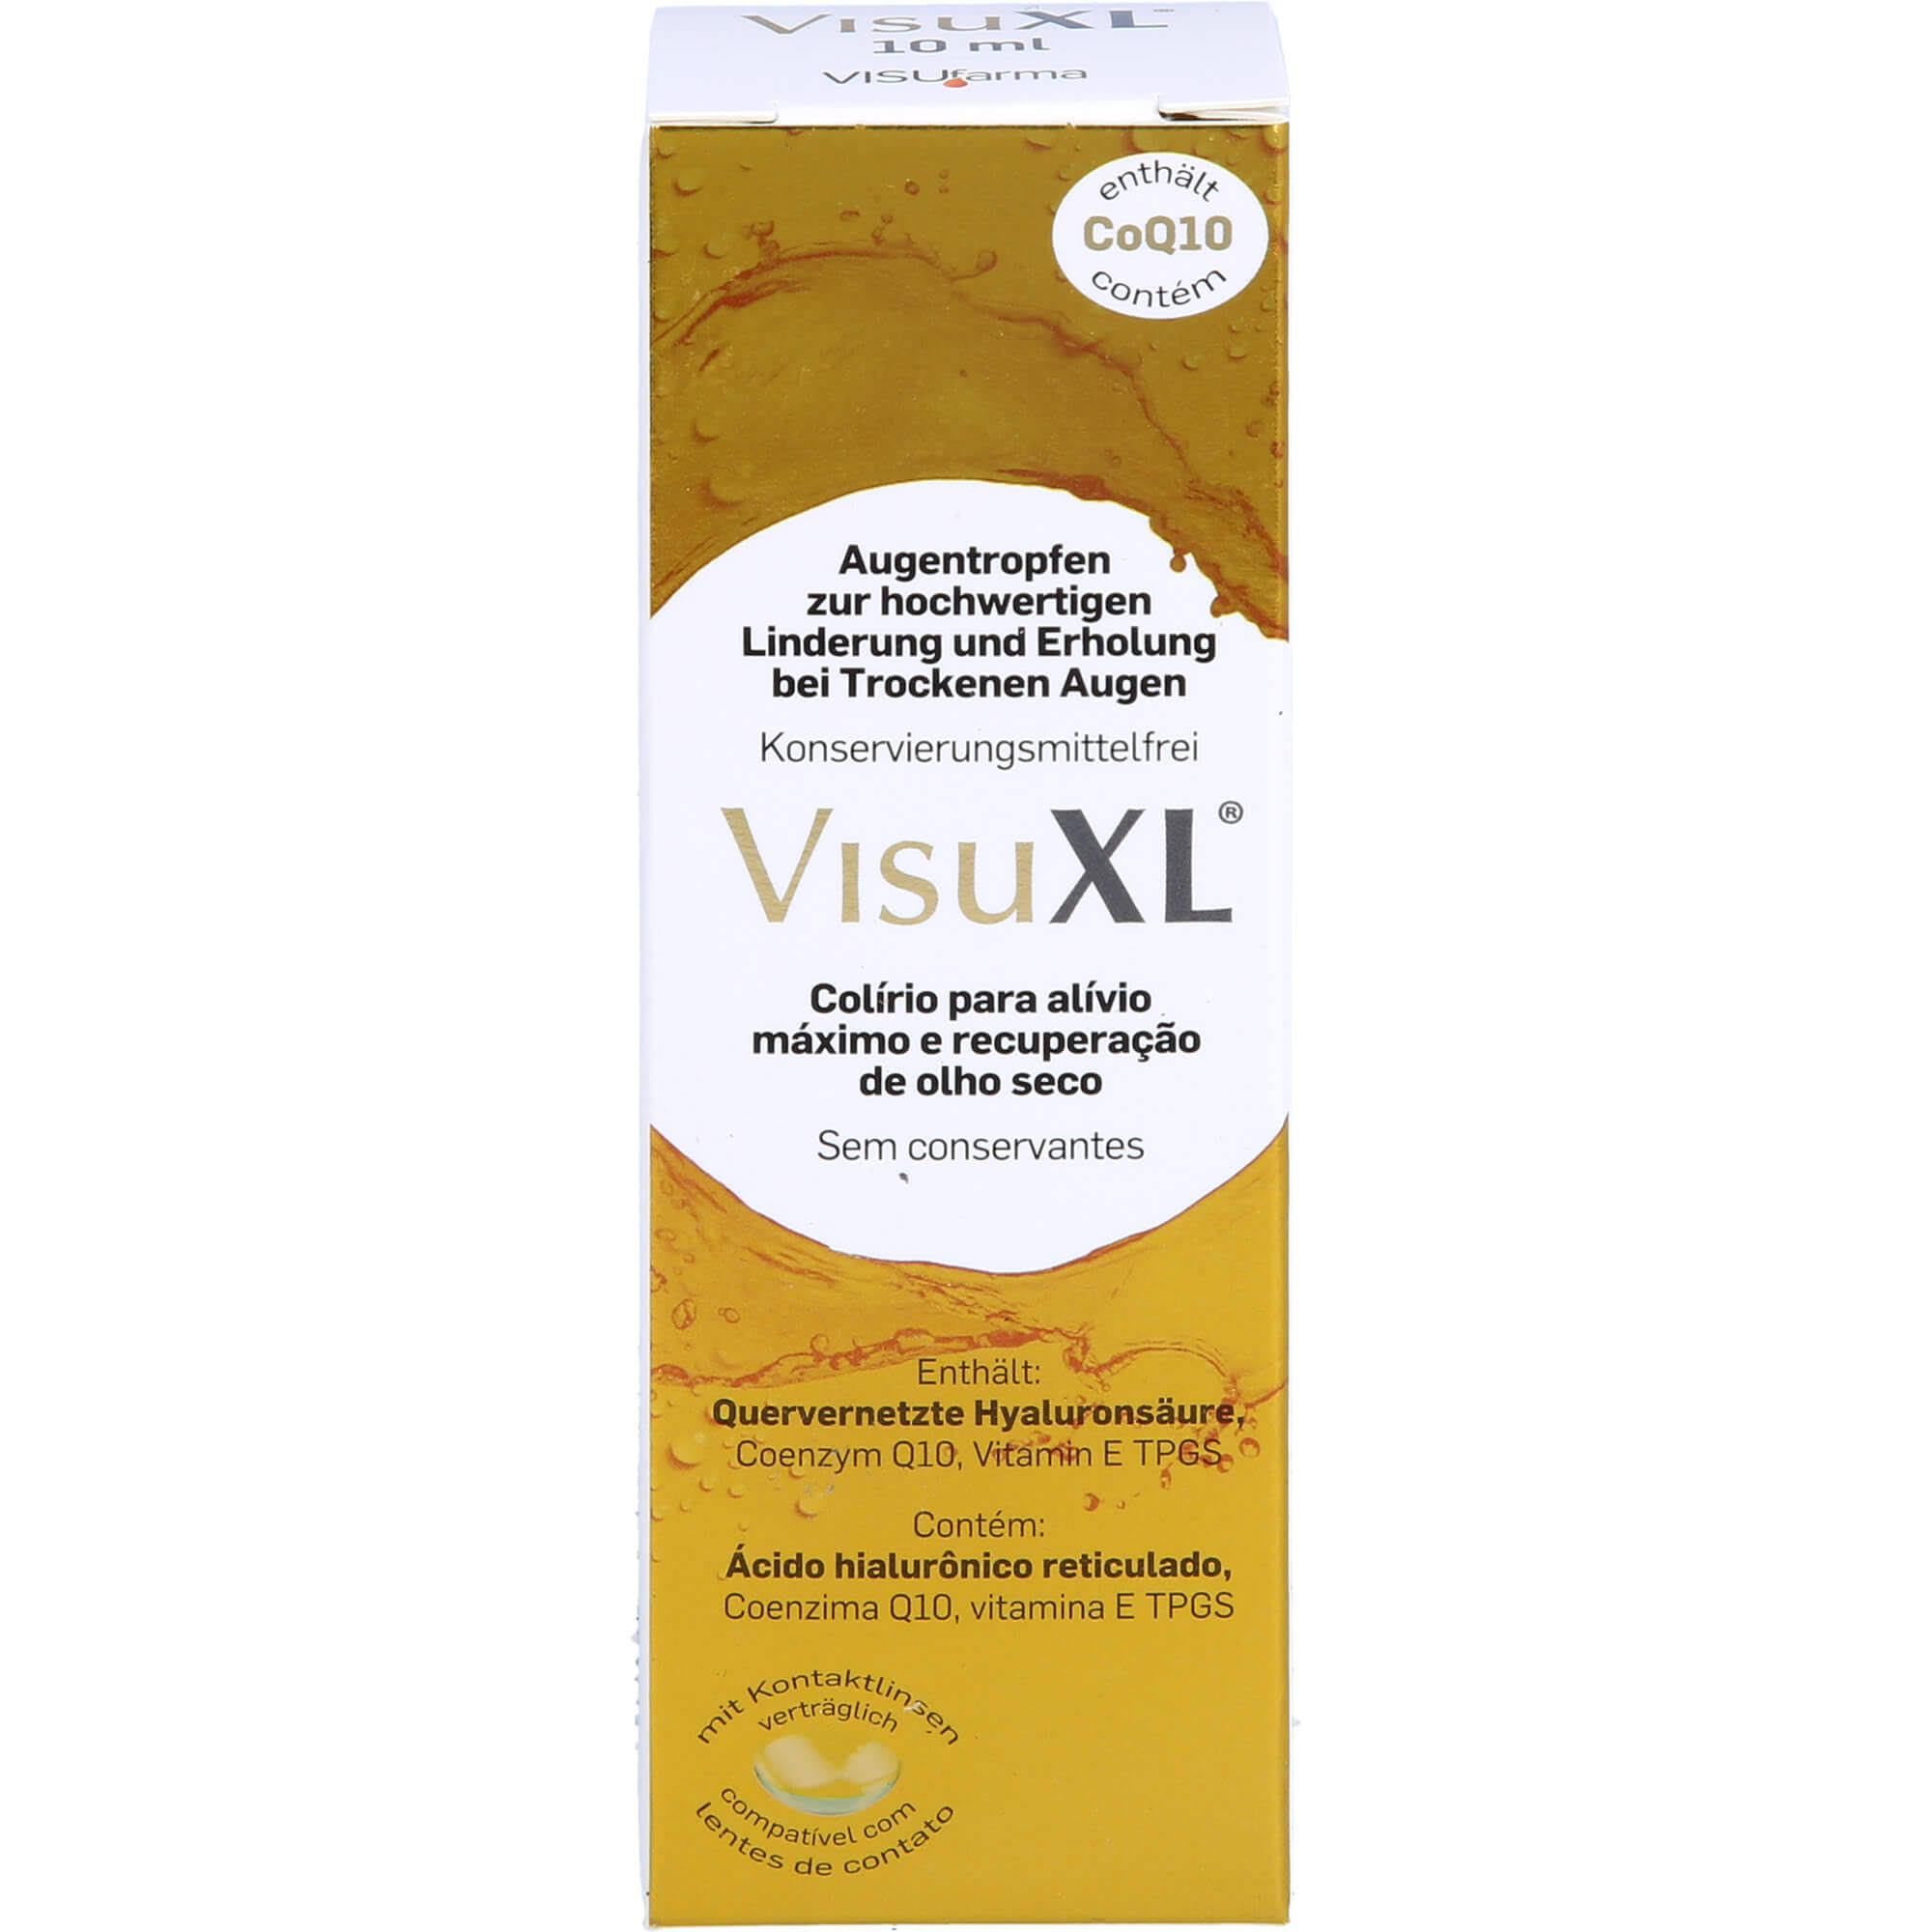 Visufarma Visuxl Preservative Premium Dry Eye Relief and Recovery Drops - 10ml